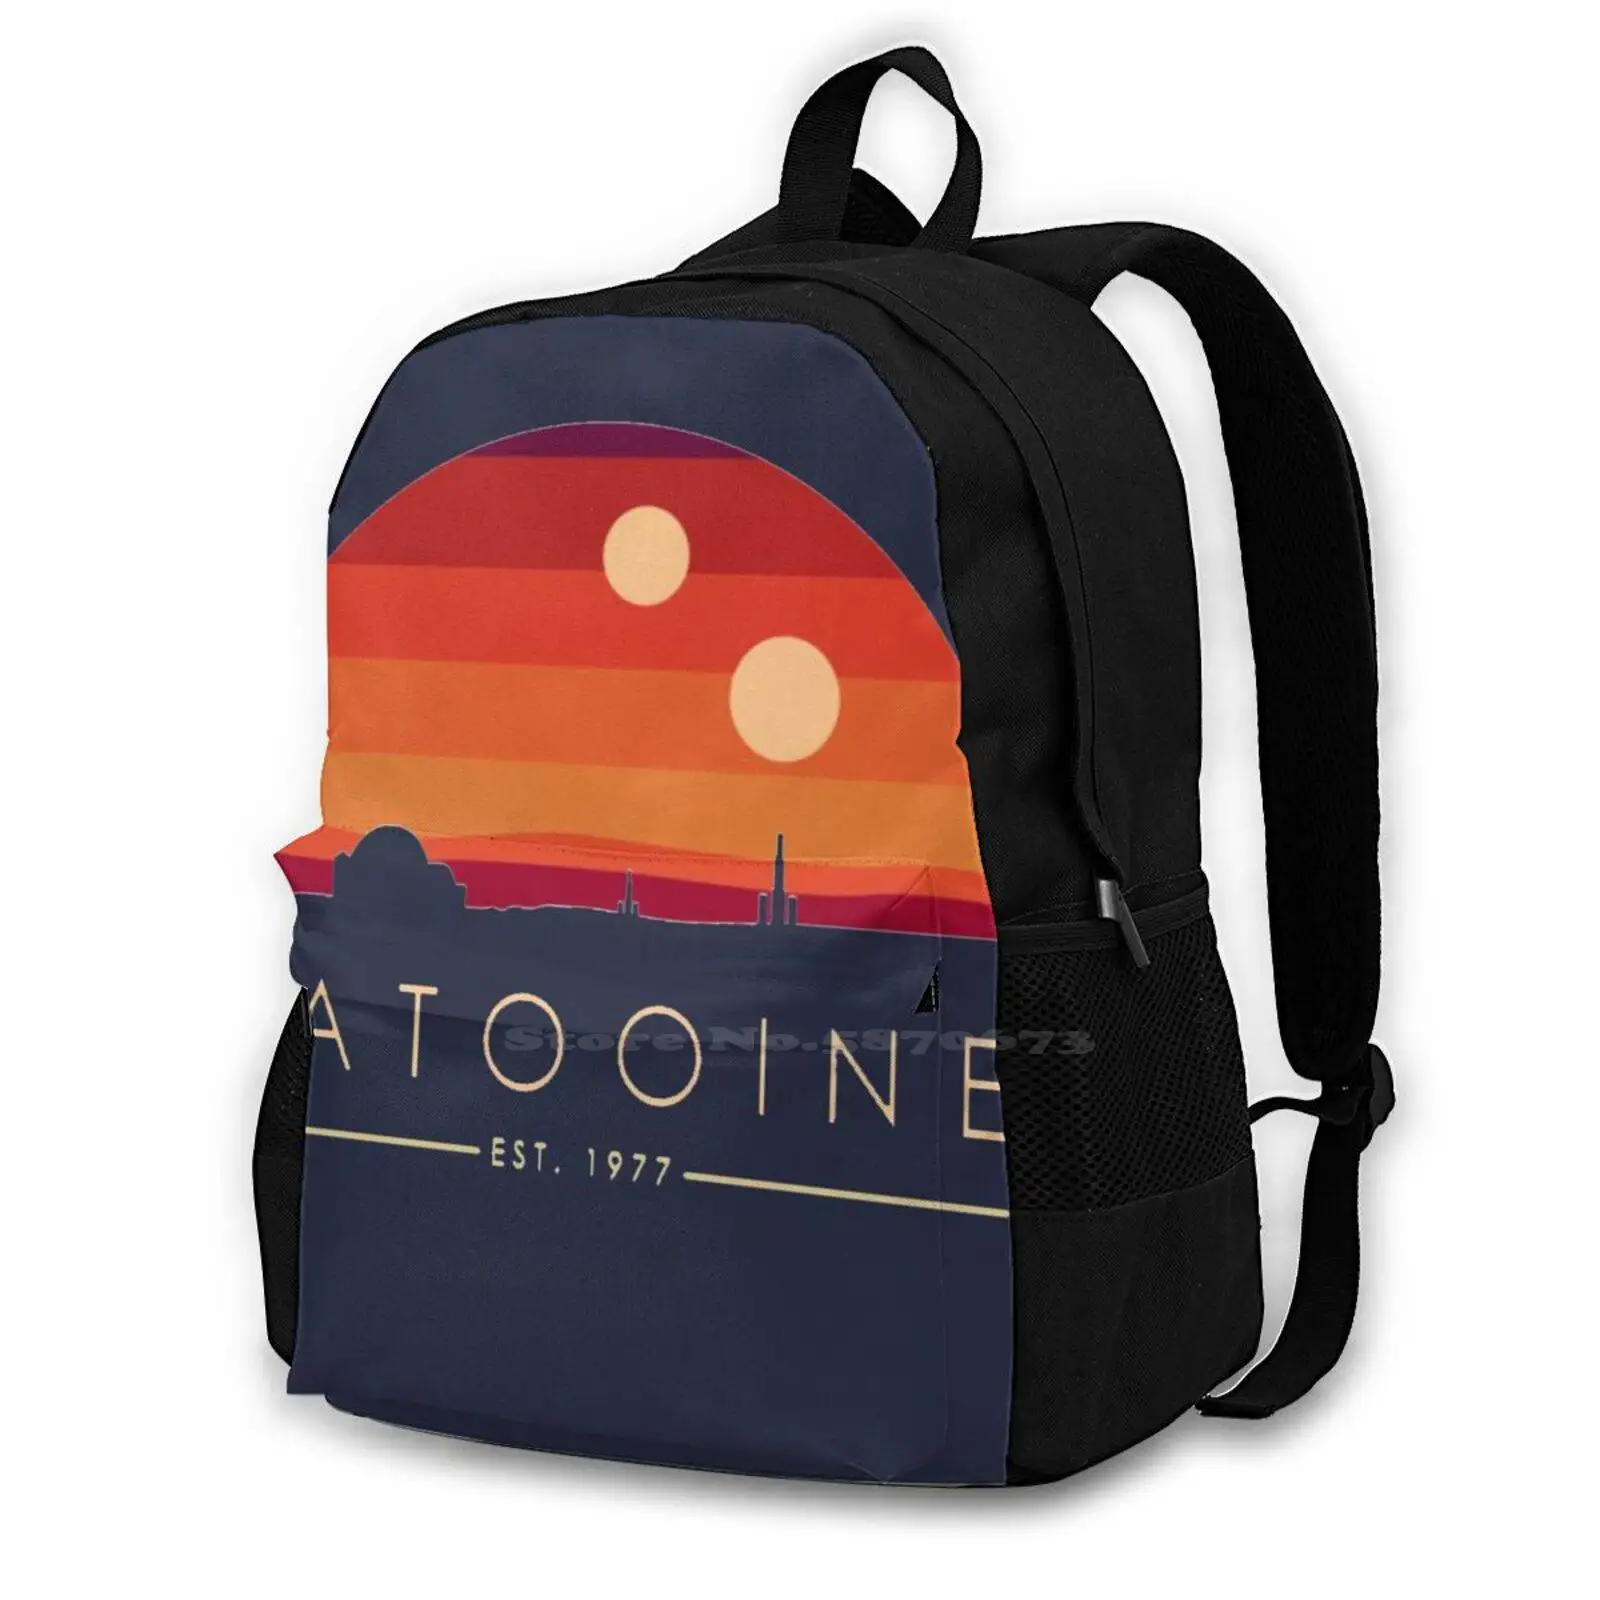 Tatooine Est 1977 3D Print Design Backpack Casual Bag 99 98 97 96 95 94 93 James Bond 1 2 3 4 5 6 7 1 2 3 4 5 The The 001 99 98